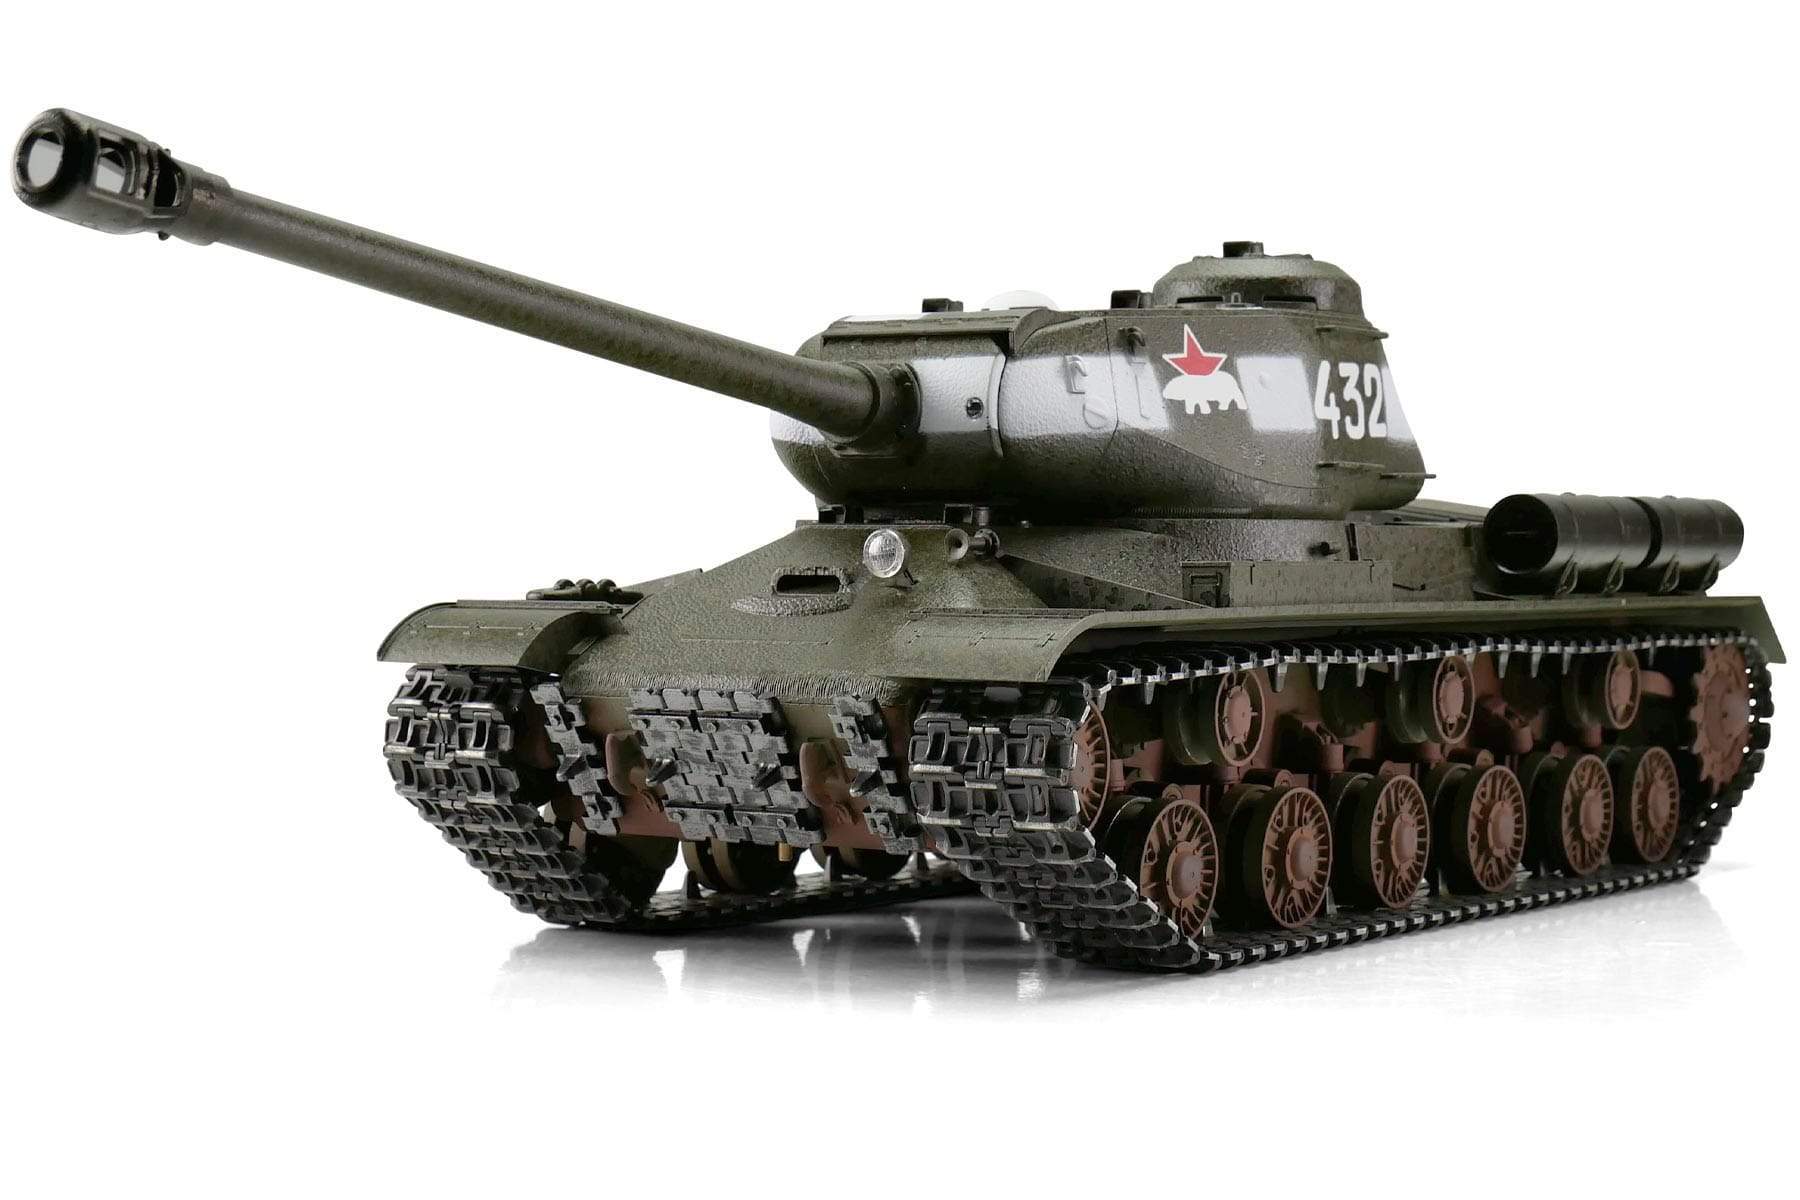 Panzer Barrackssoviet Kv-44 Tank Model Kit - Ww2 Military Building Blocks  For Adults